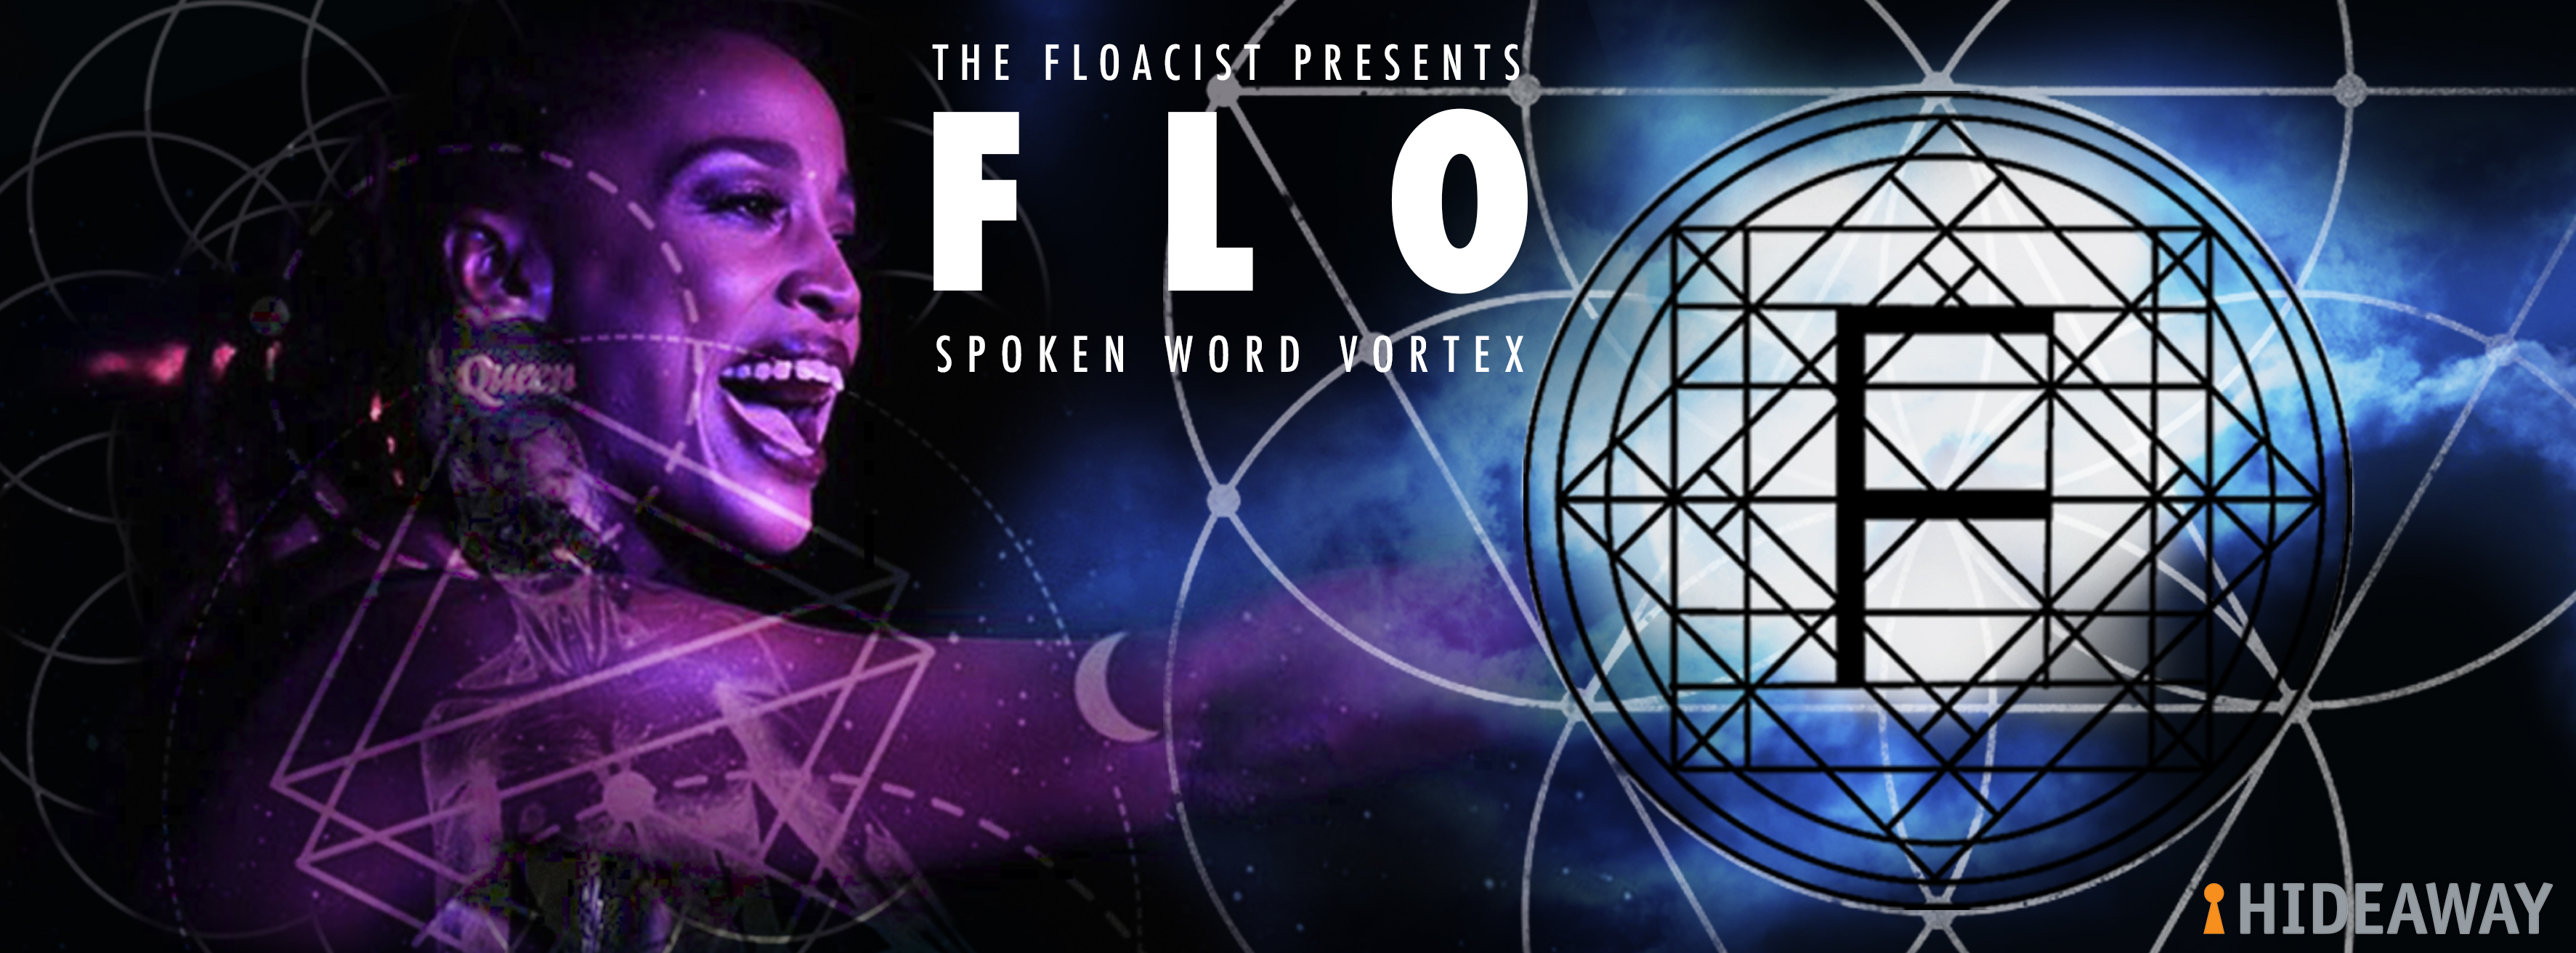 The Floacist Presents FLO Spoken Word Vortex at Hideaway Jazz Club London